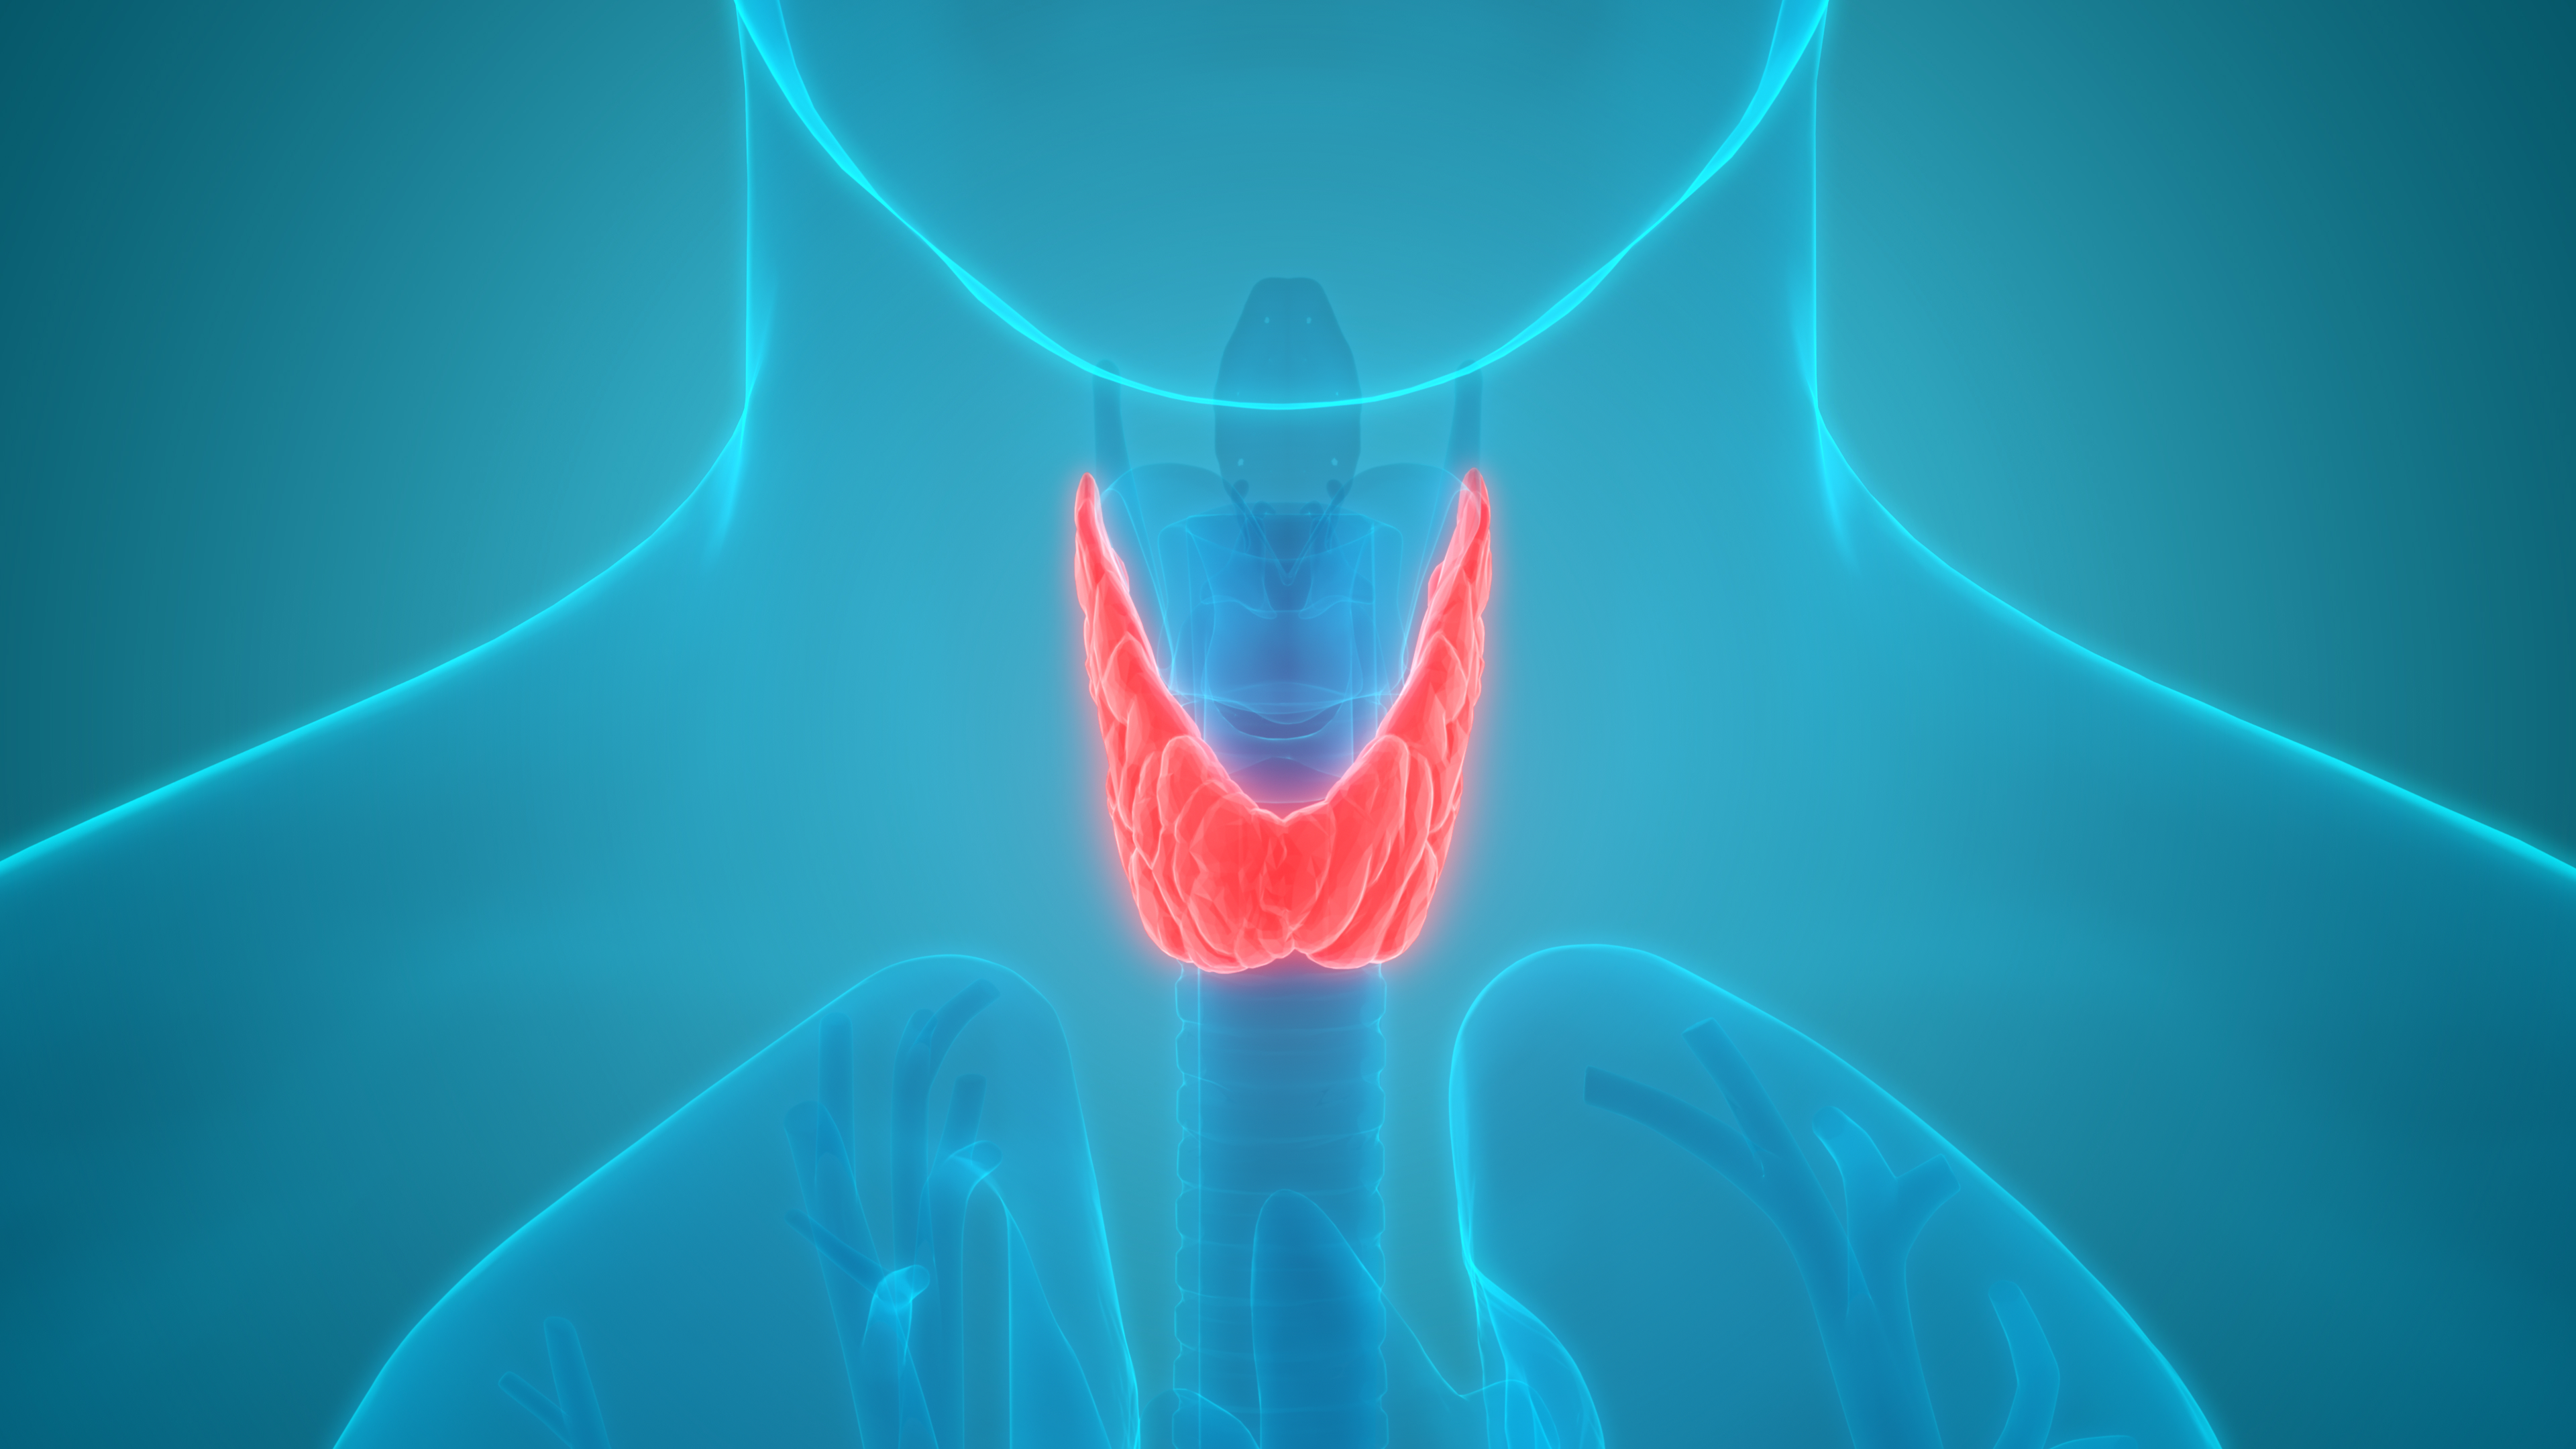 Эндокринология щитовидной железы. Shitovidnoe Jeleza. Здоровая щитовидная железа. Изображение щитовидной железы.